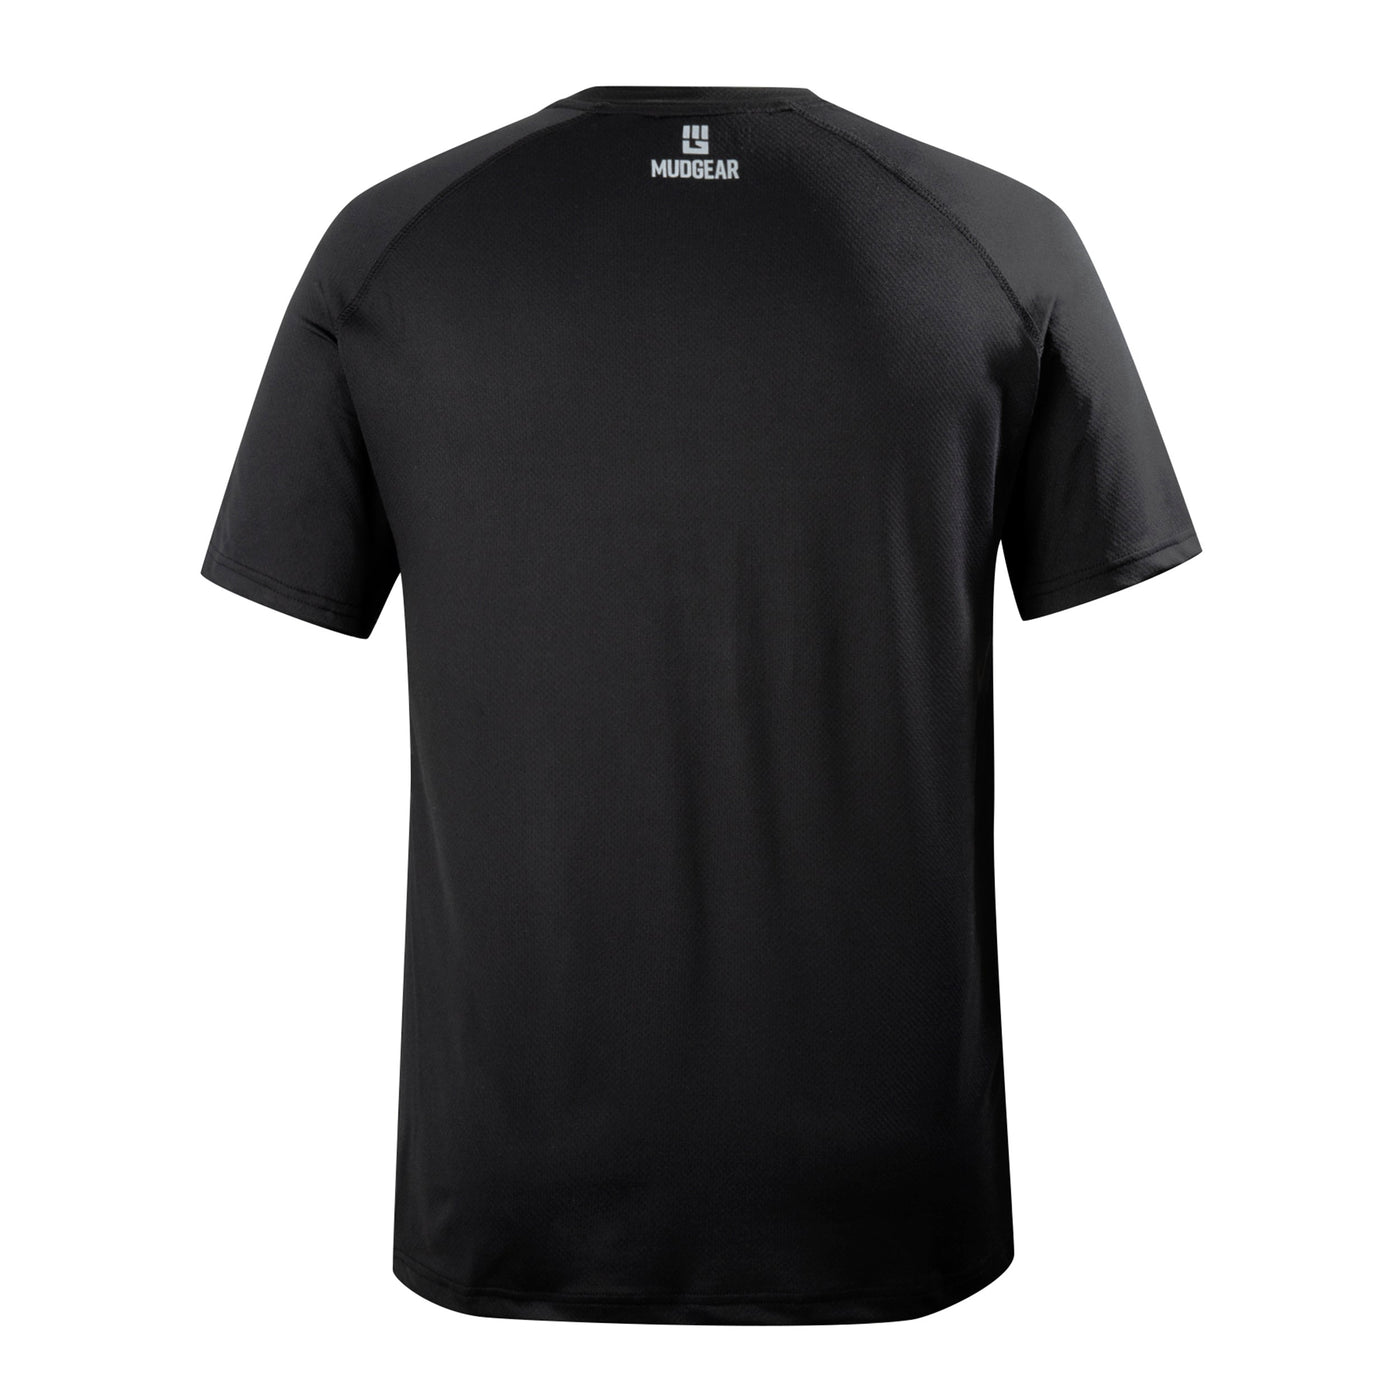 MudGear Men's Loose Fit Performance Shirt VX - Short Sleeve (Black)